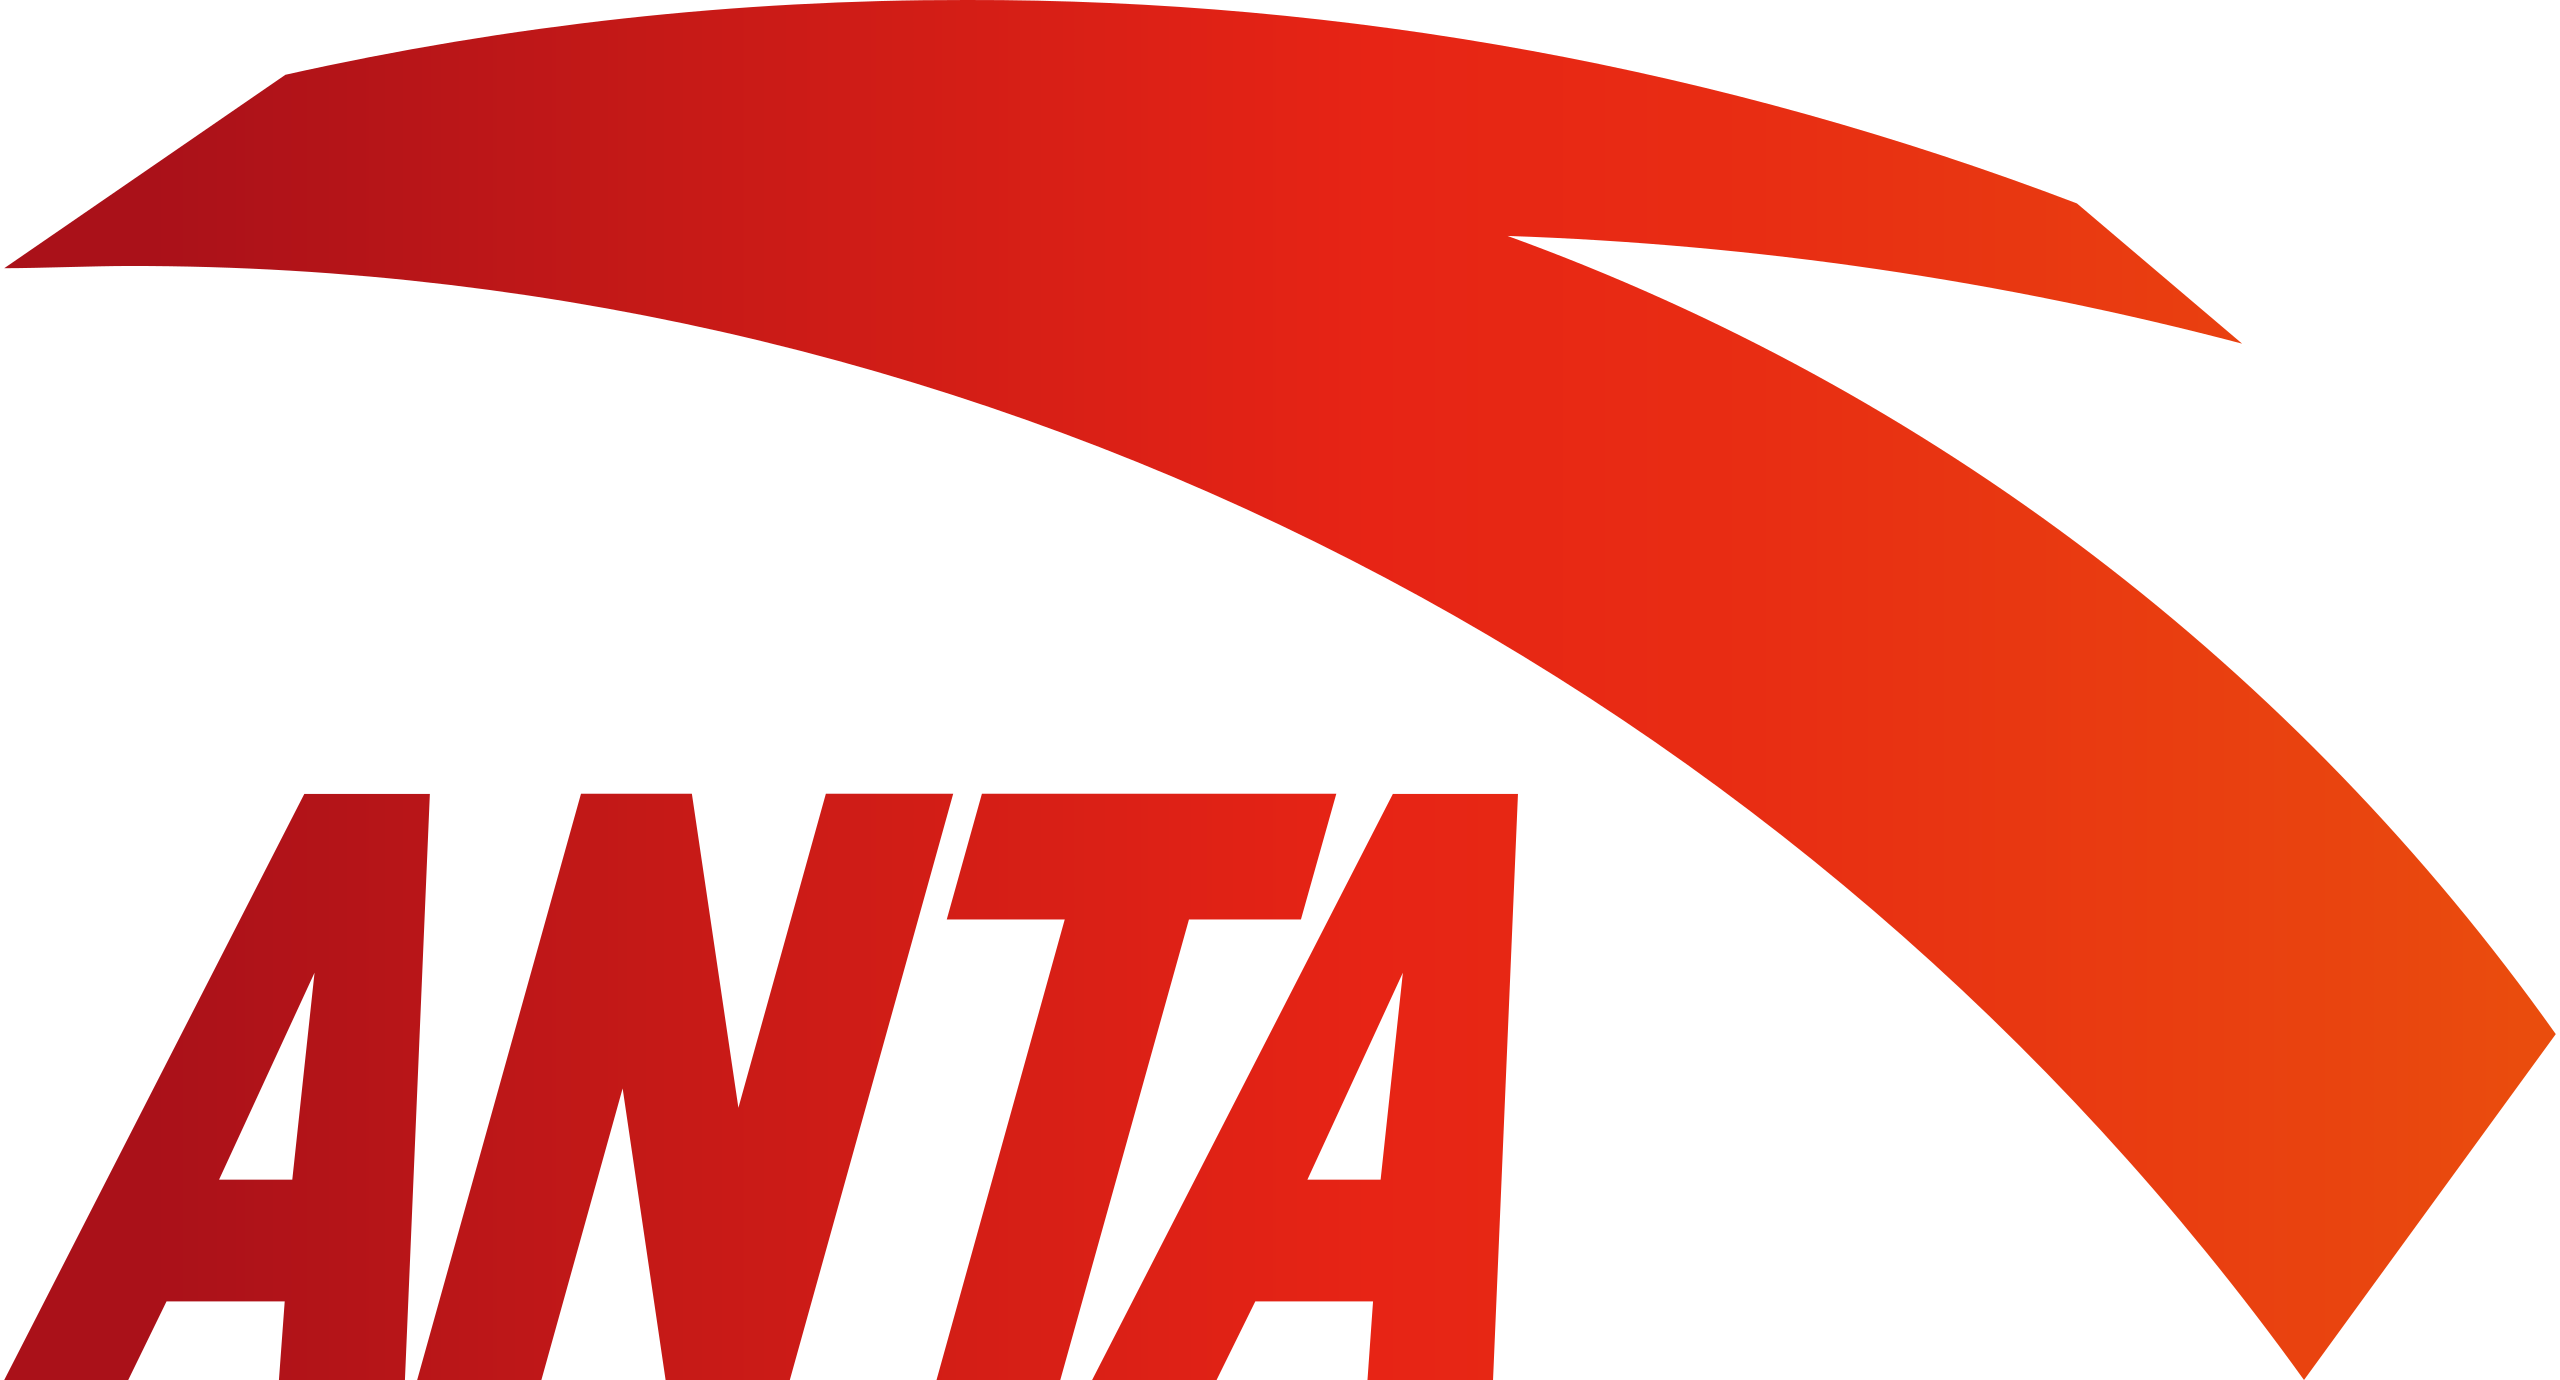 File:Anta logo.svg - Wikipedia